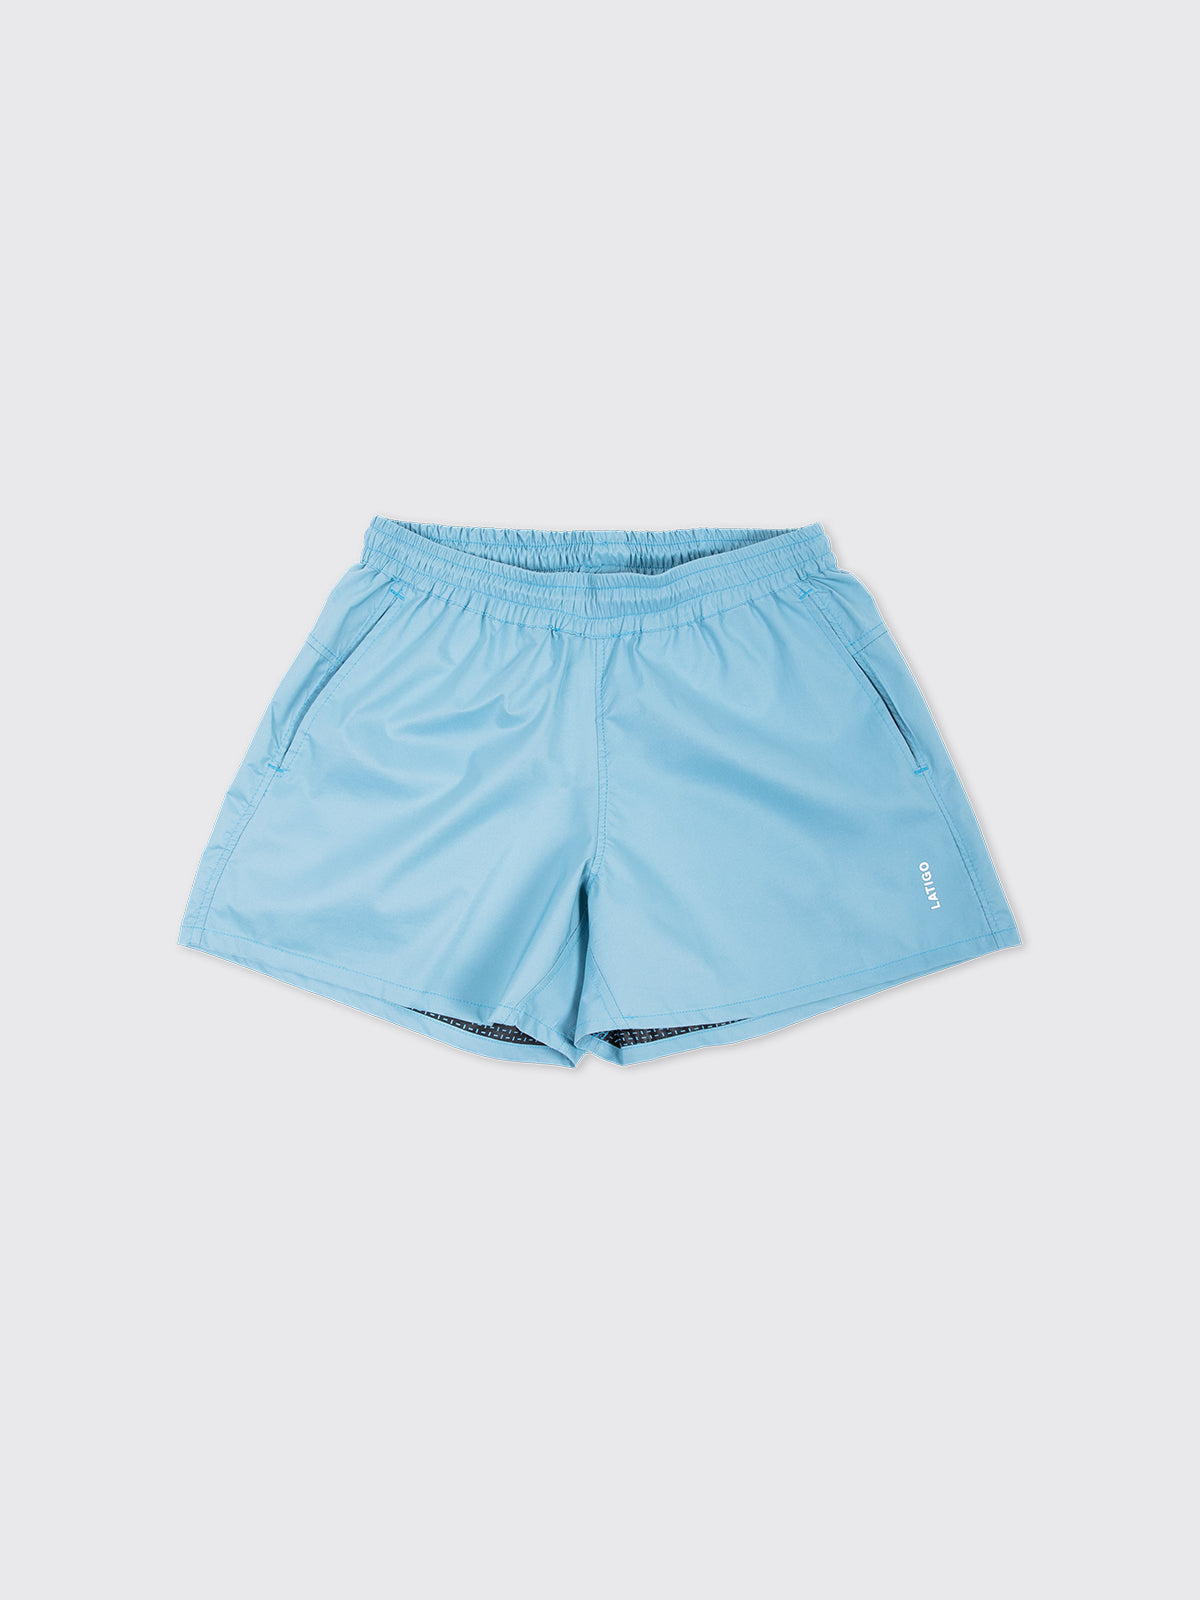 "Monte Perdido" Shorts